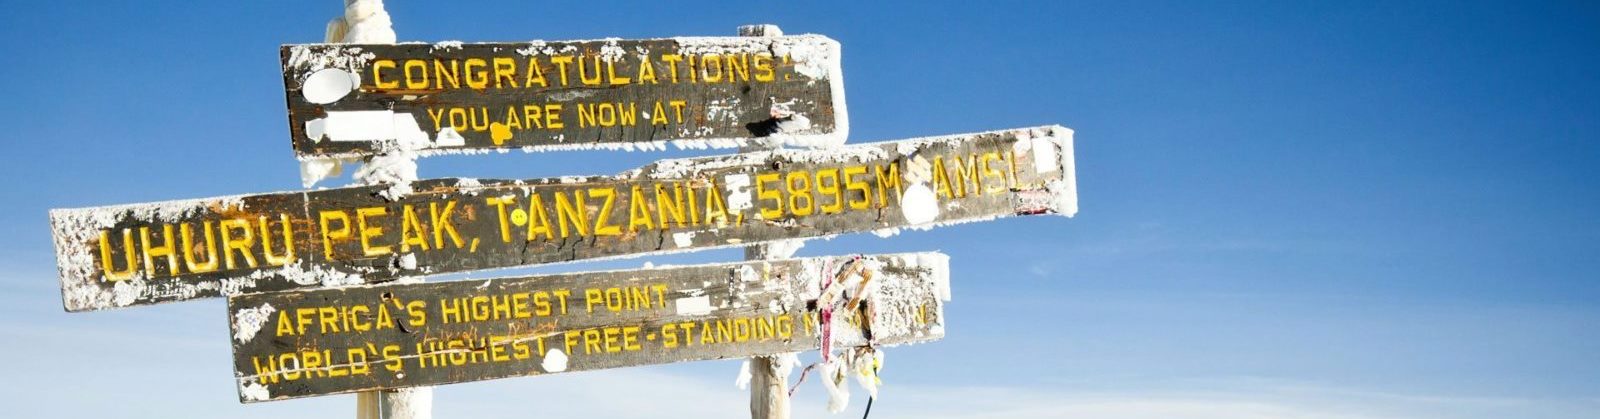 Climb-Mount-Kilimanjaro